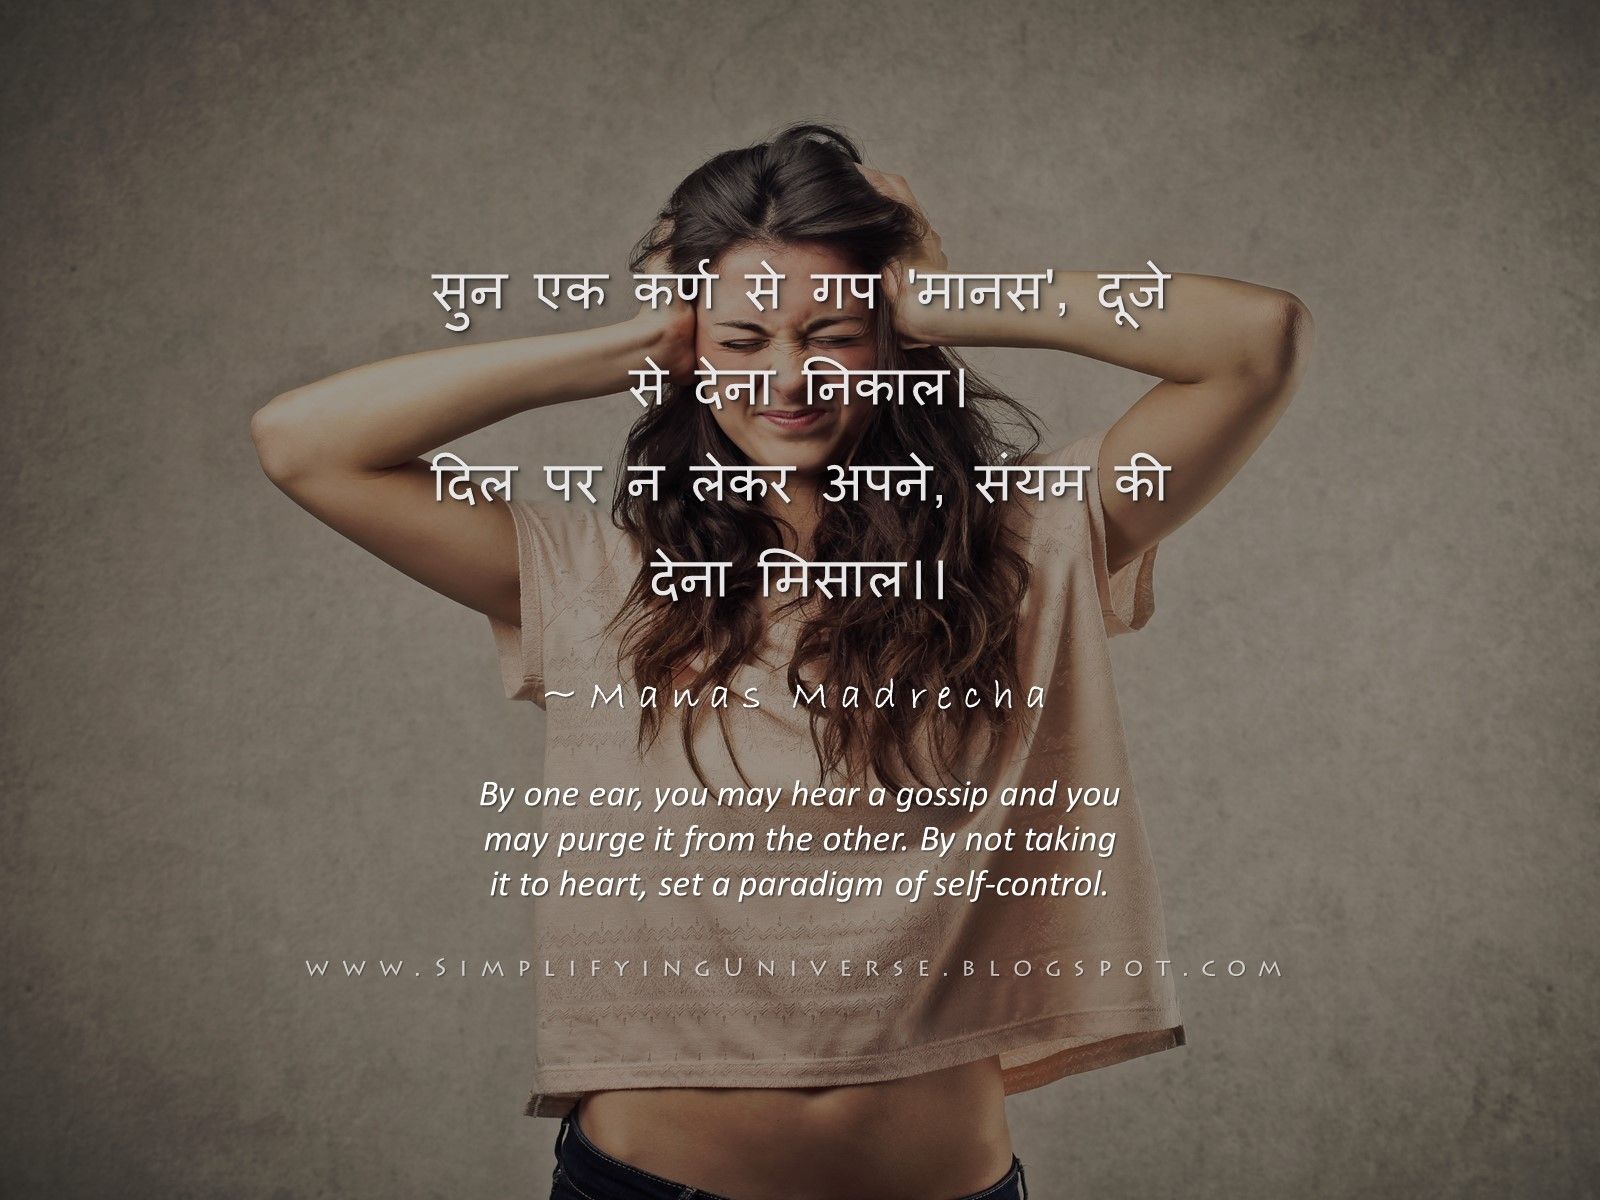 How to Control Anger and Keep Calm - Hindi Poem | Manas Madrecha blog